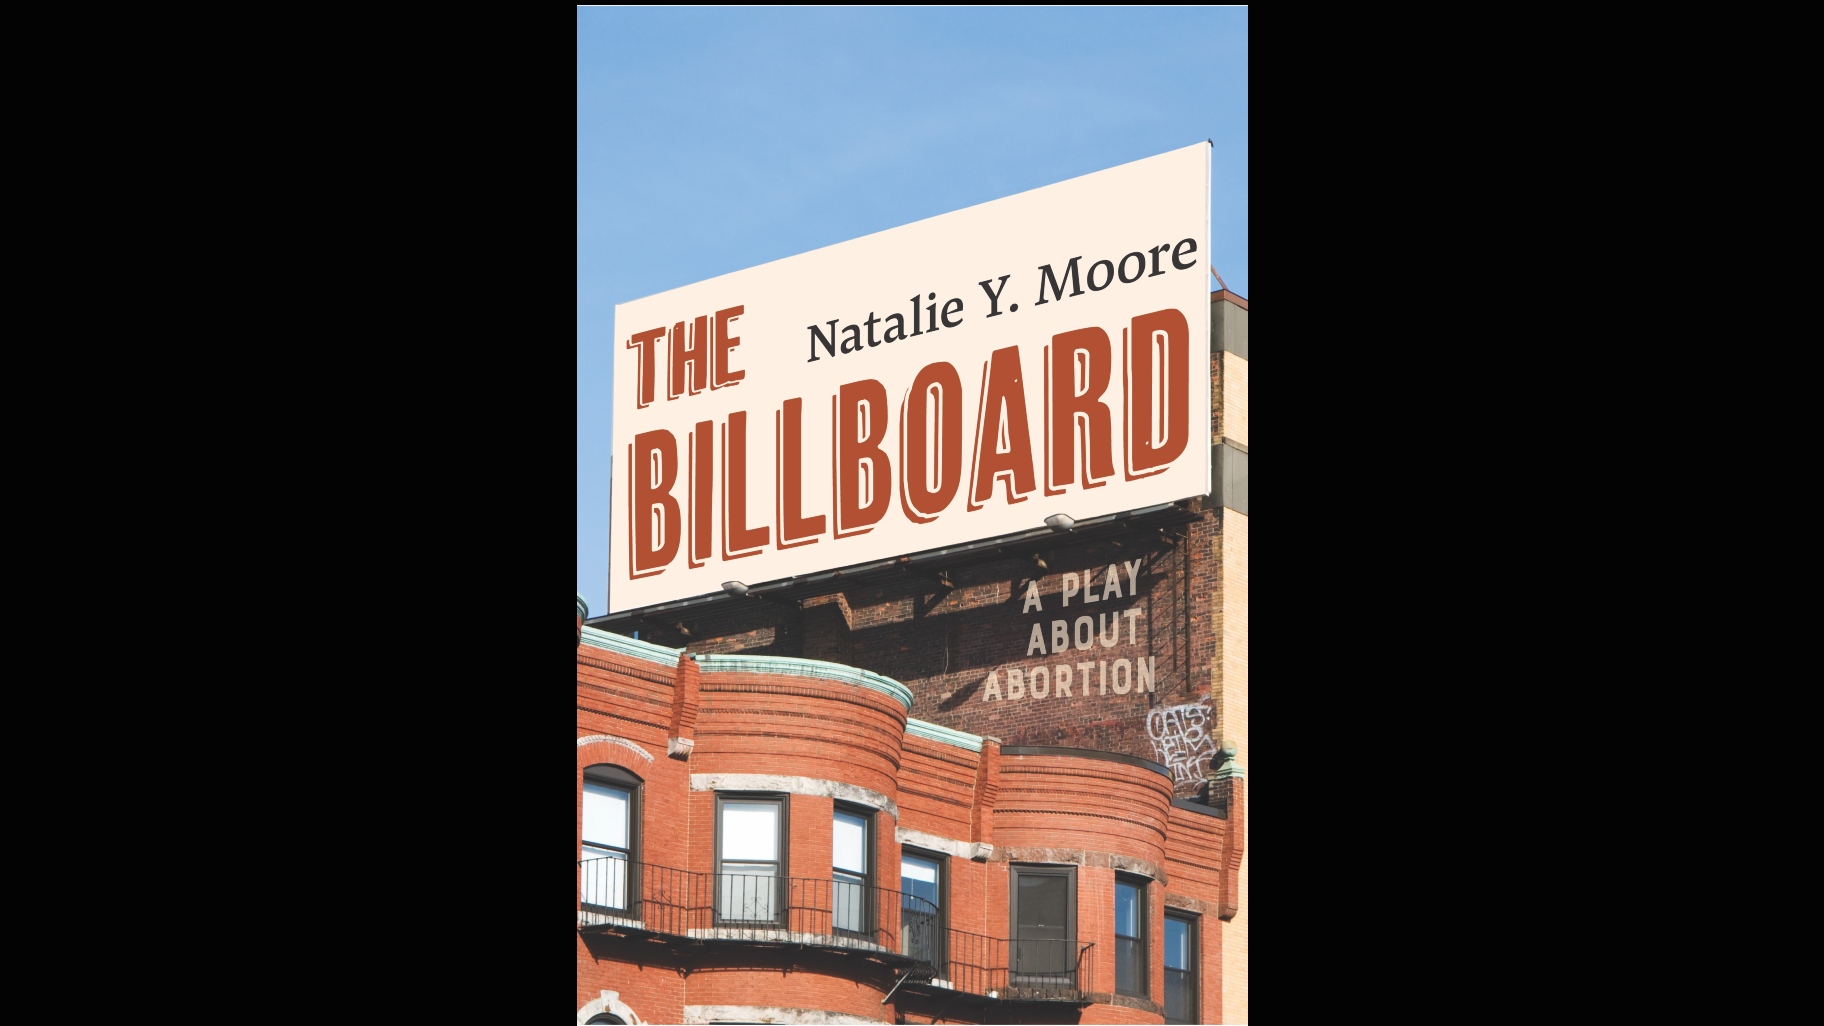 The Billboard Poster Credit TheBillboard.